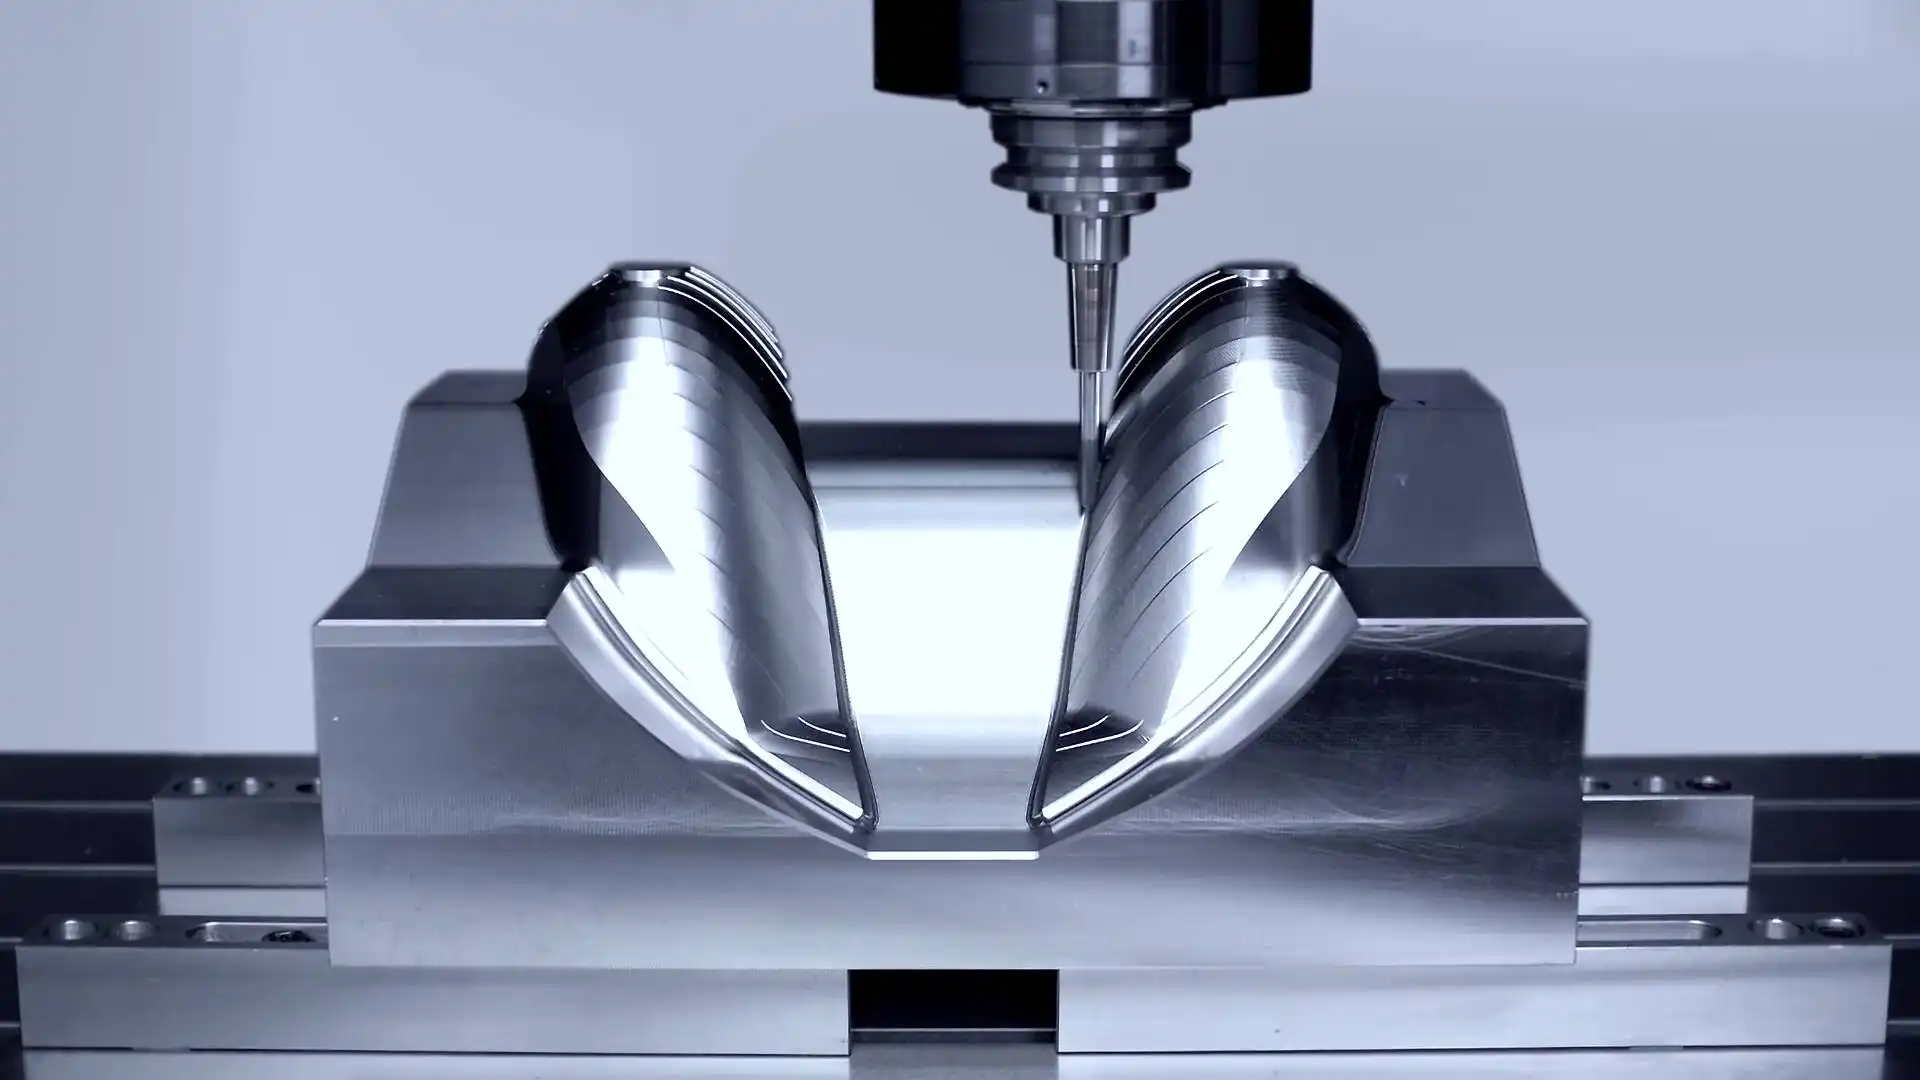 SLA 3D Printing vs. Traditional Manufacturing